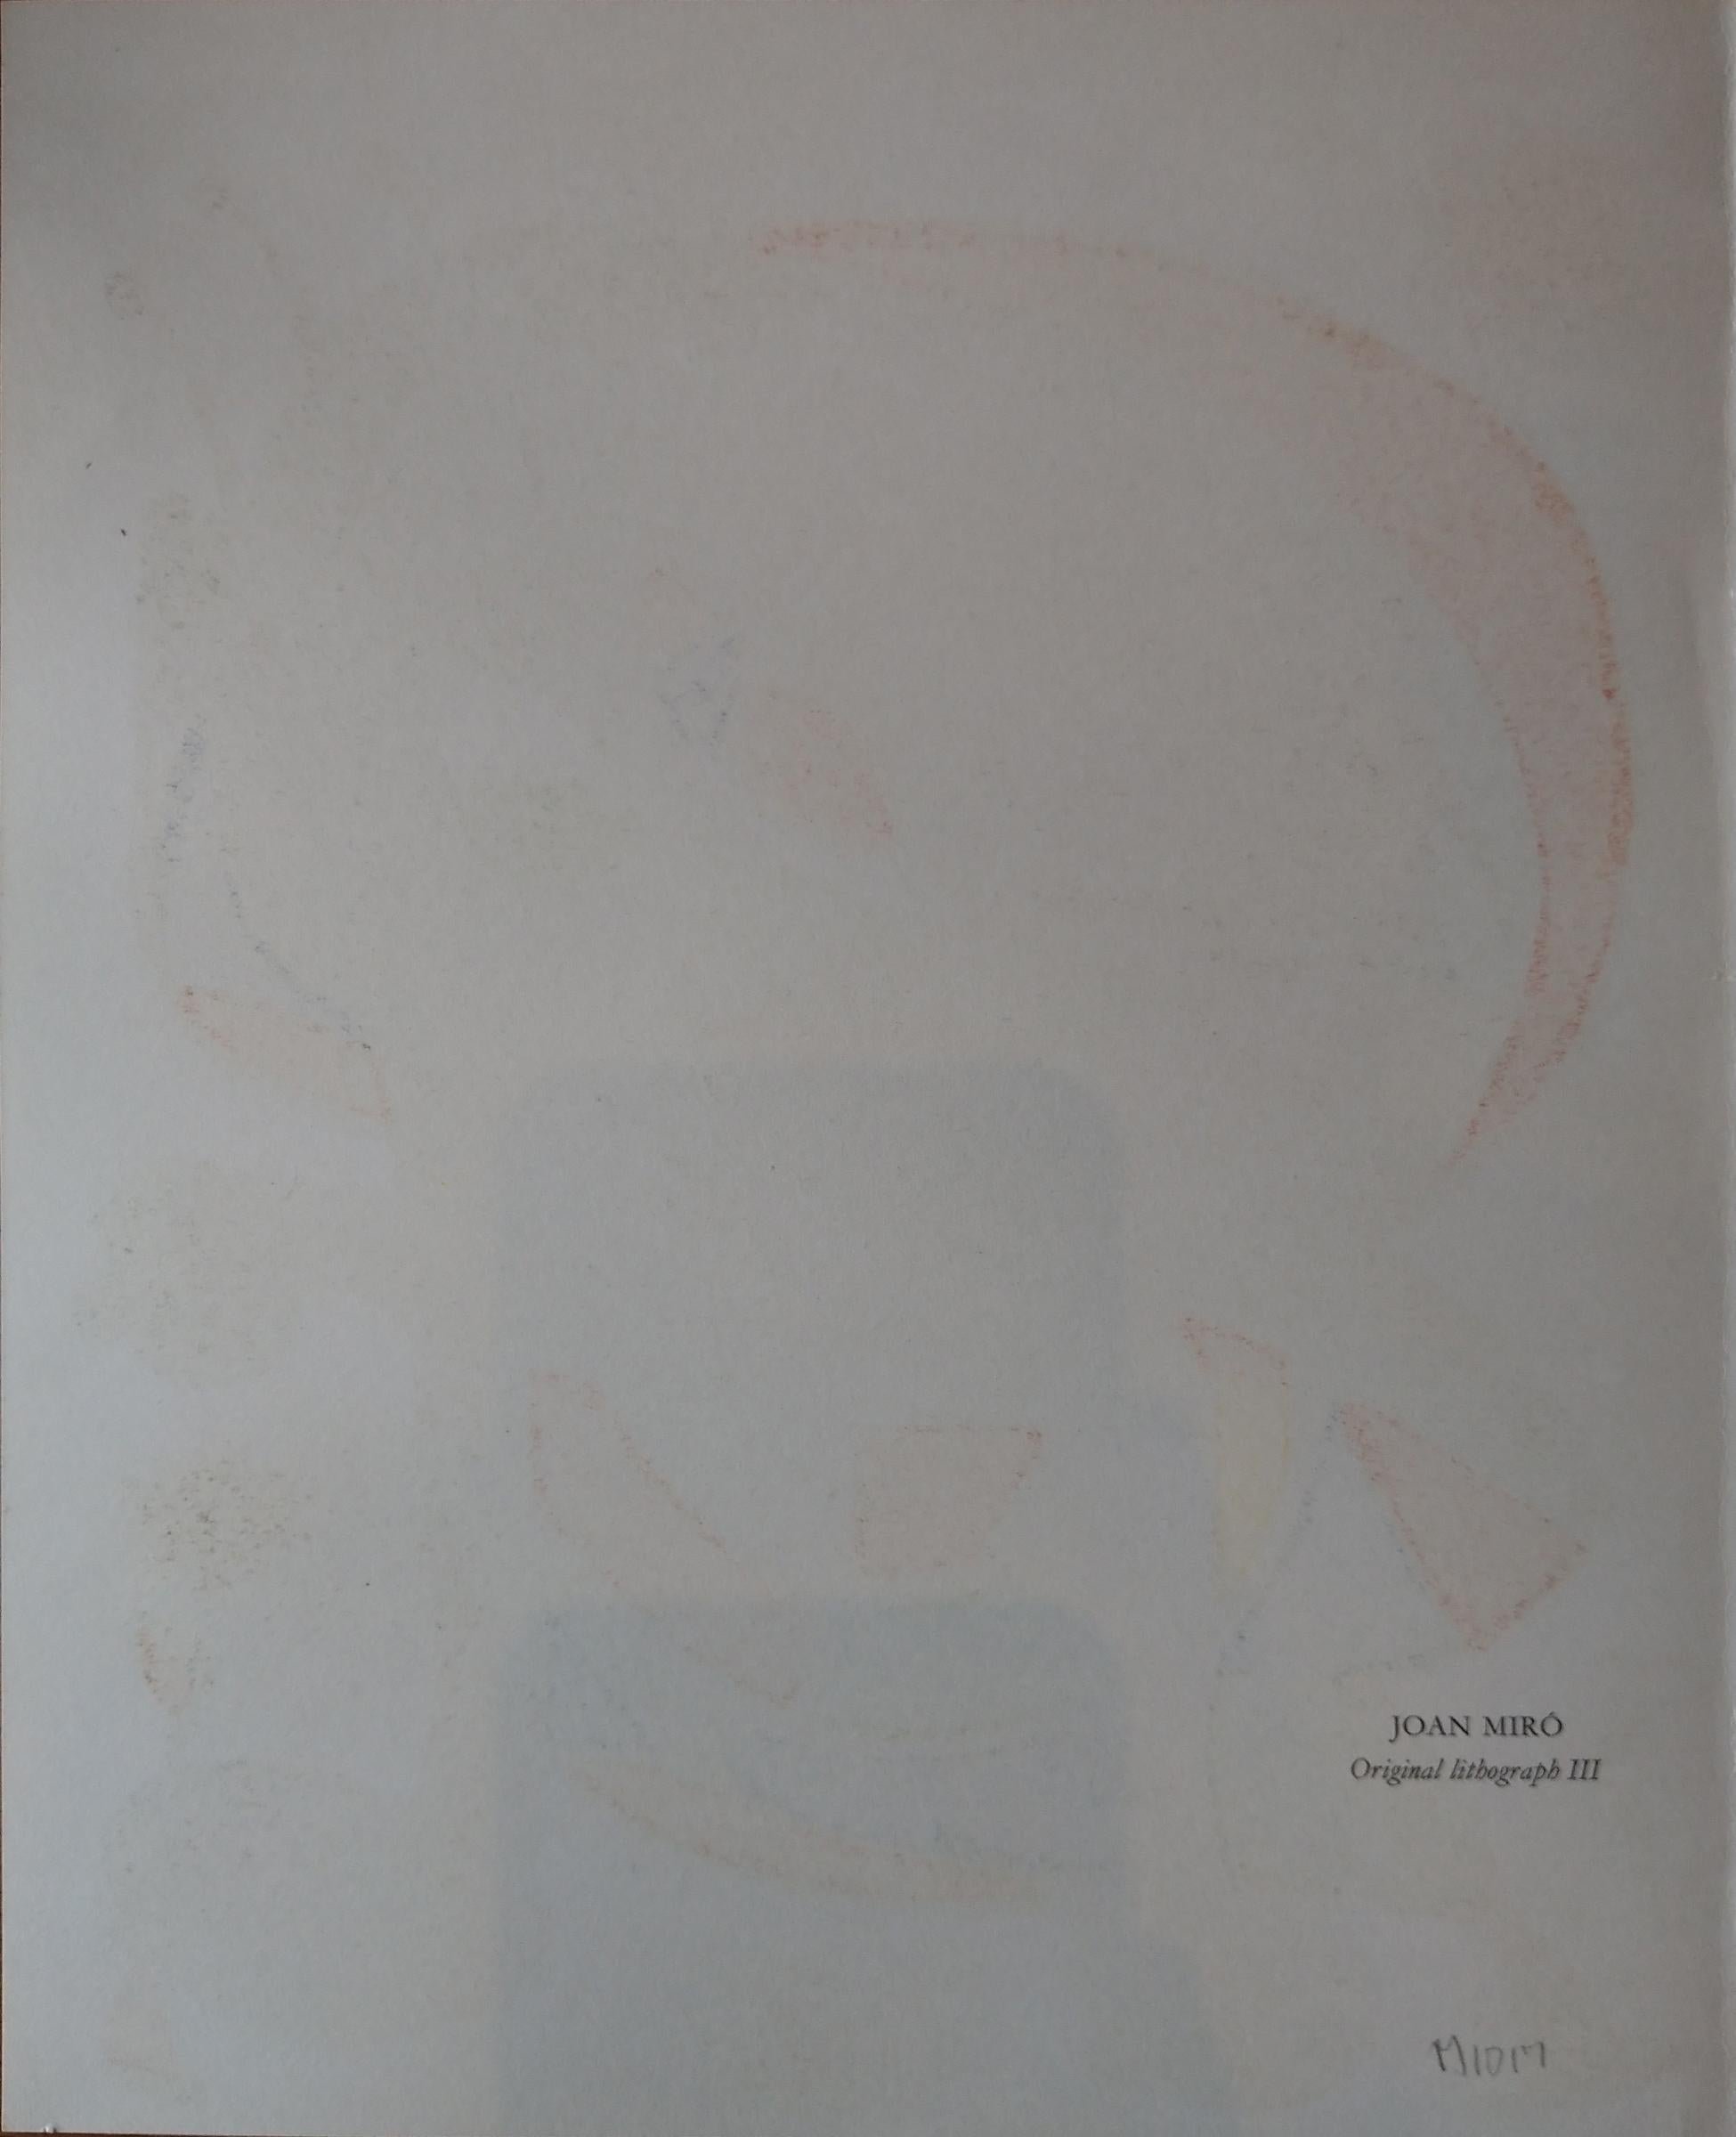 Lithograph III - Volume III - Surrealist Print by Joan Miró